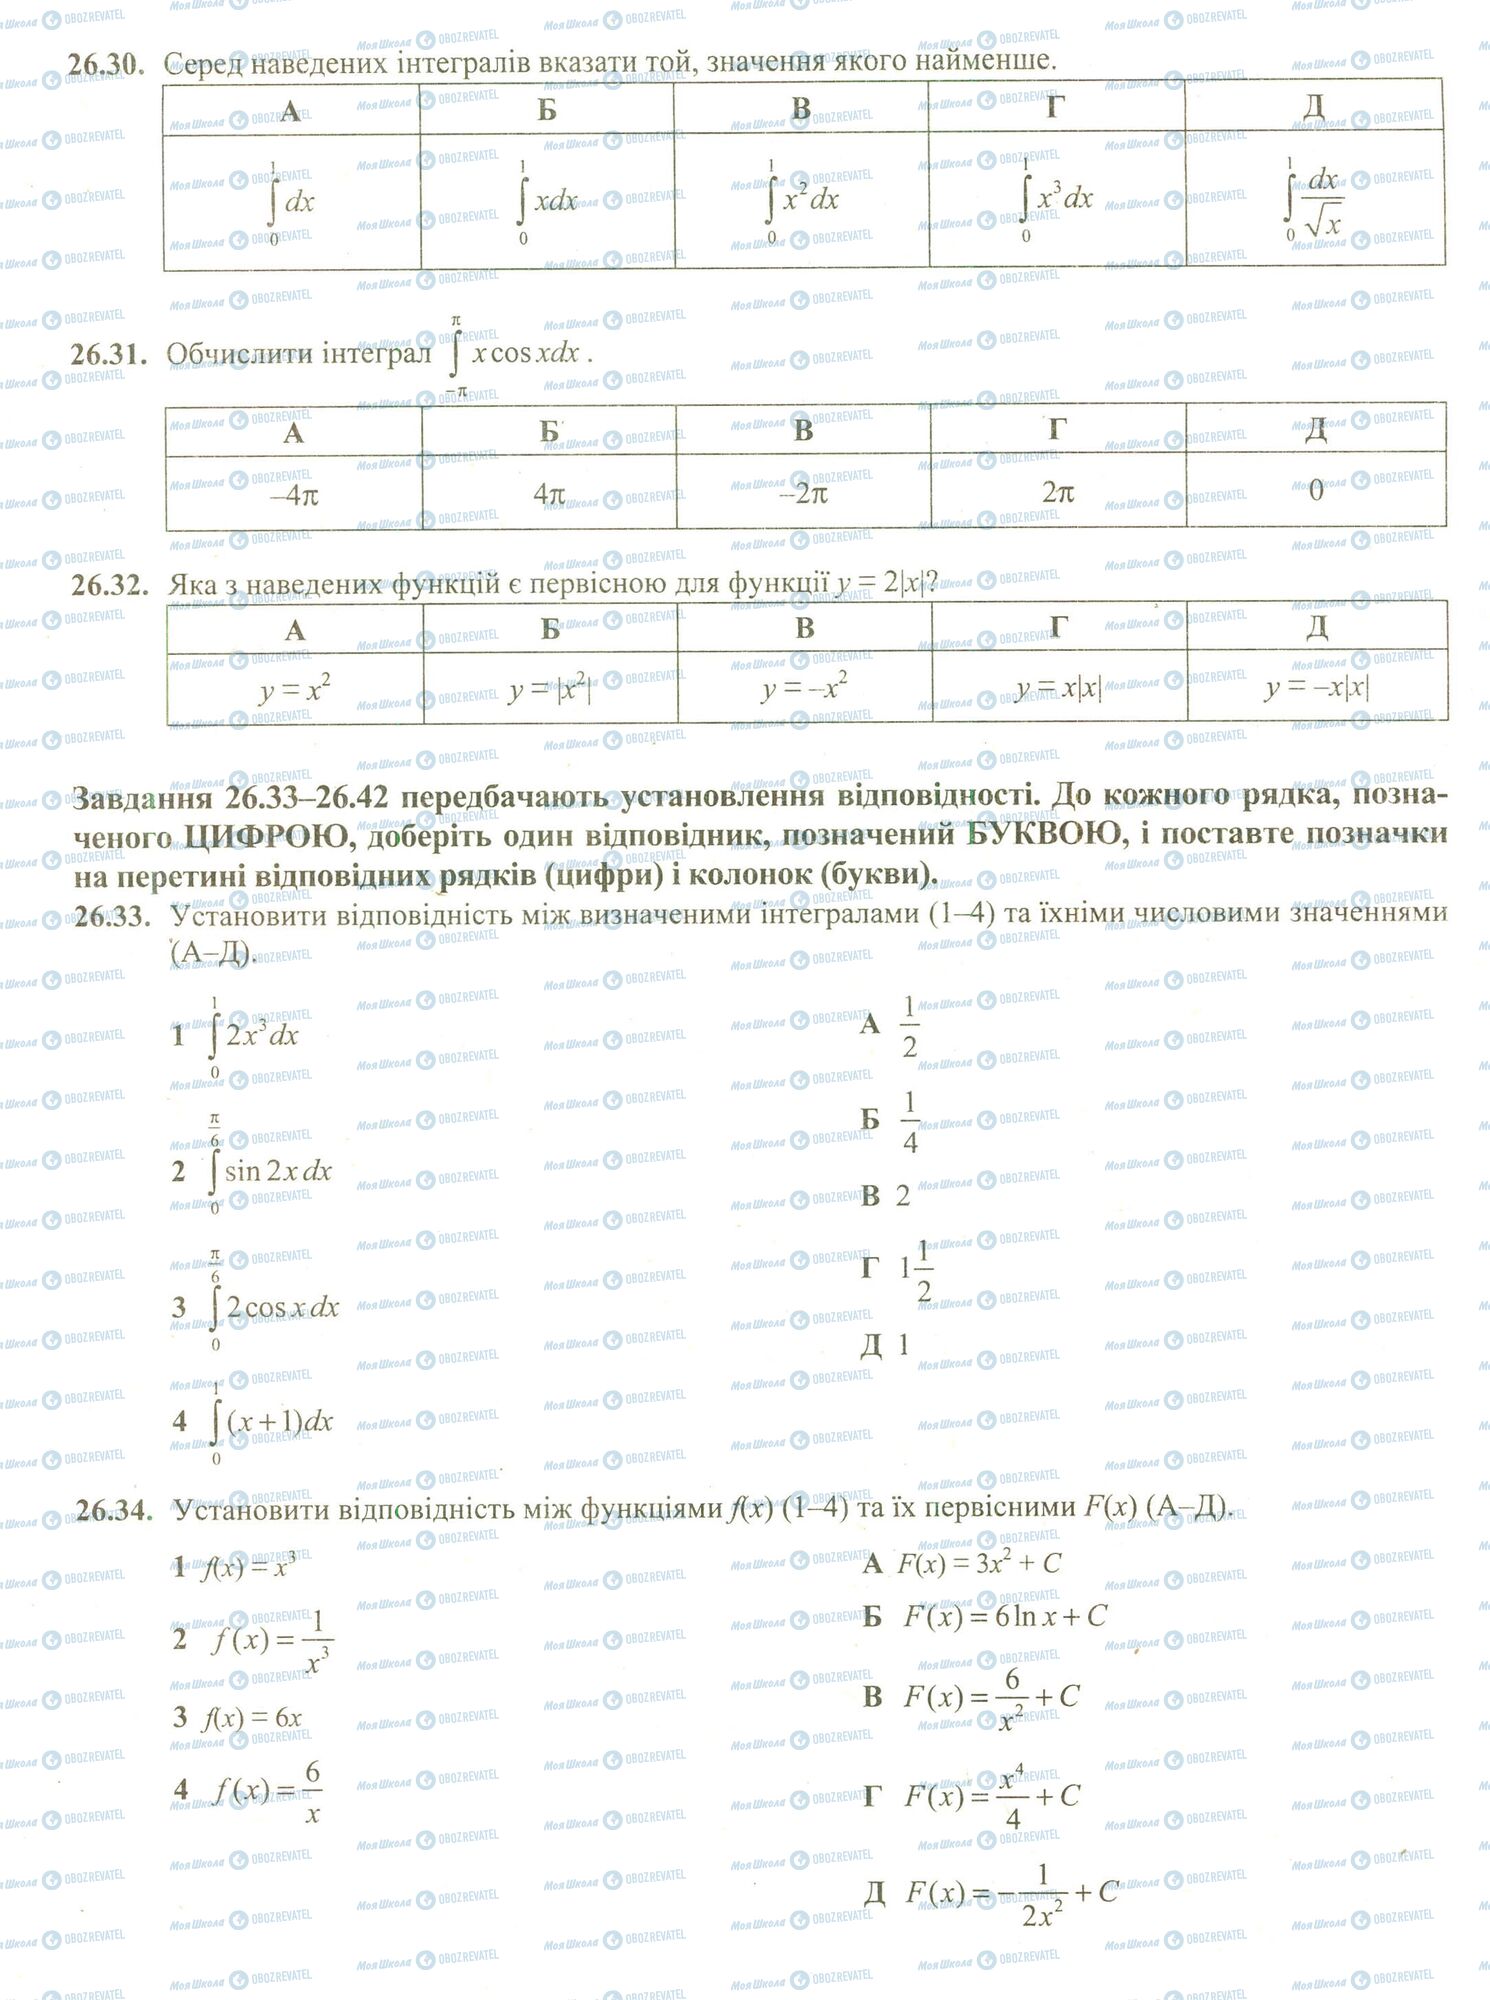 ЗНО Математика 11 класс страница 30-34